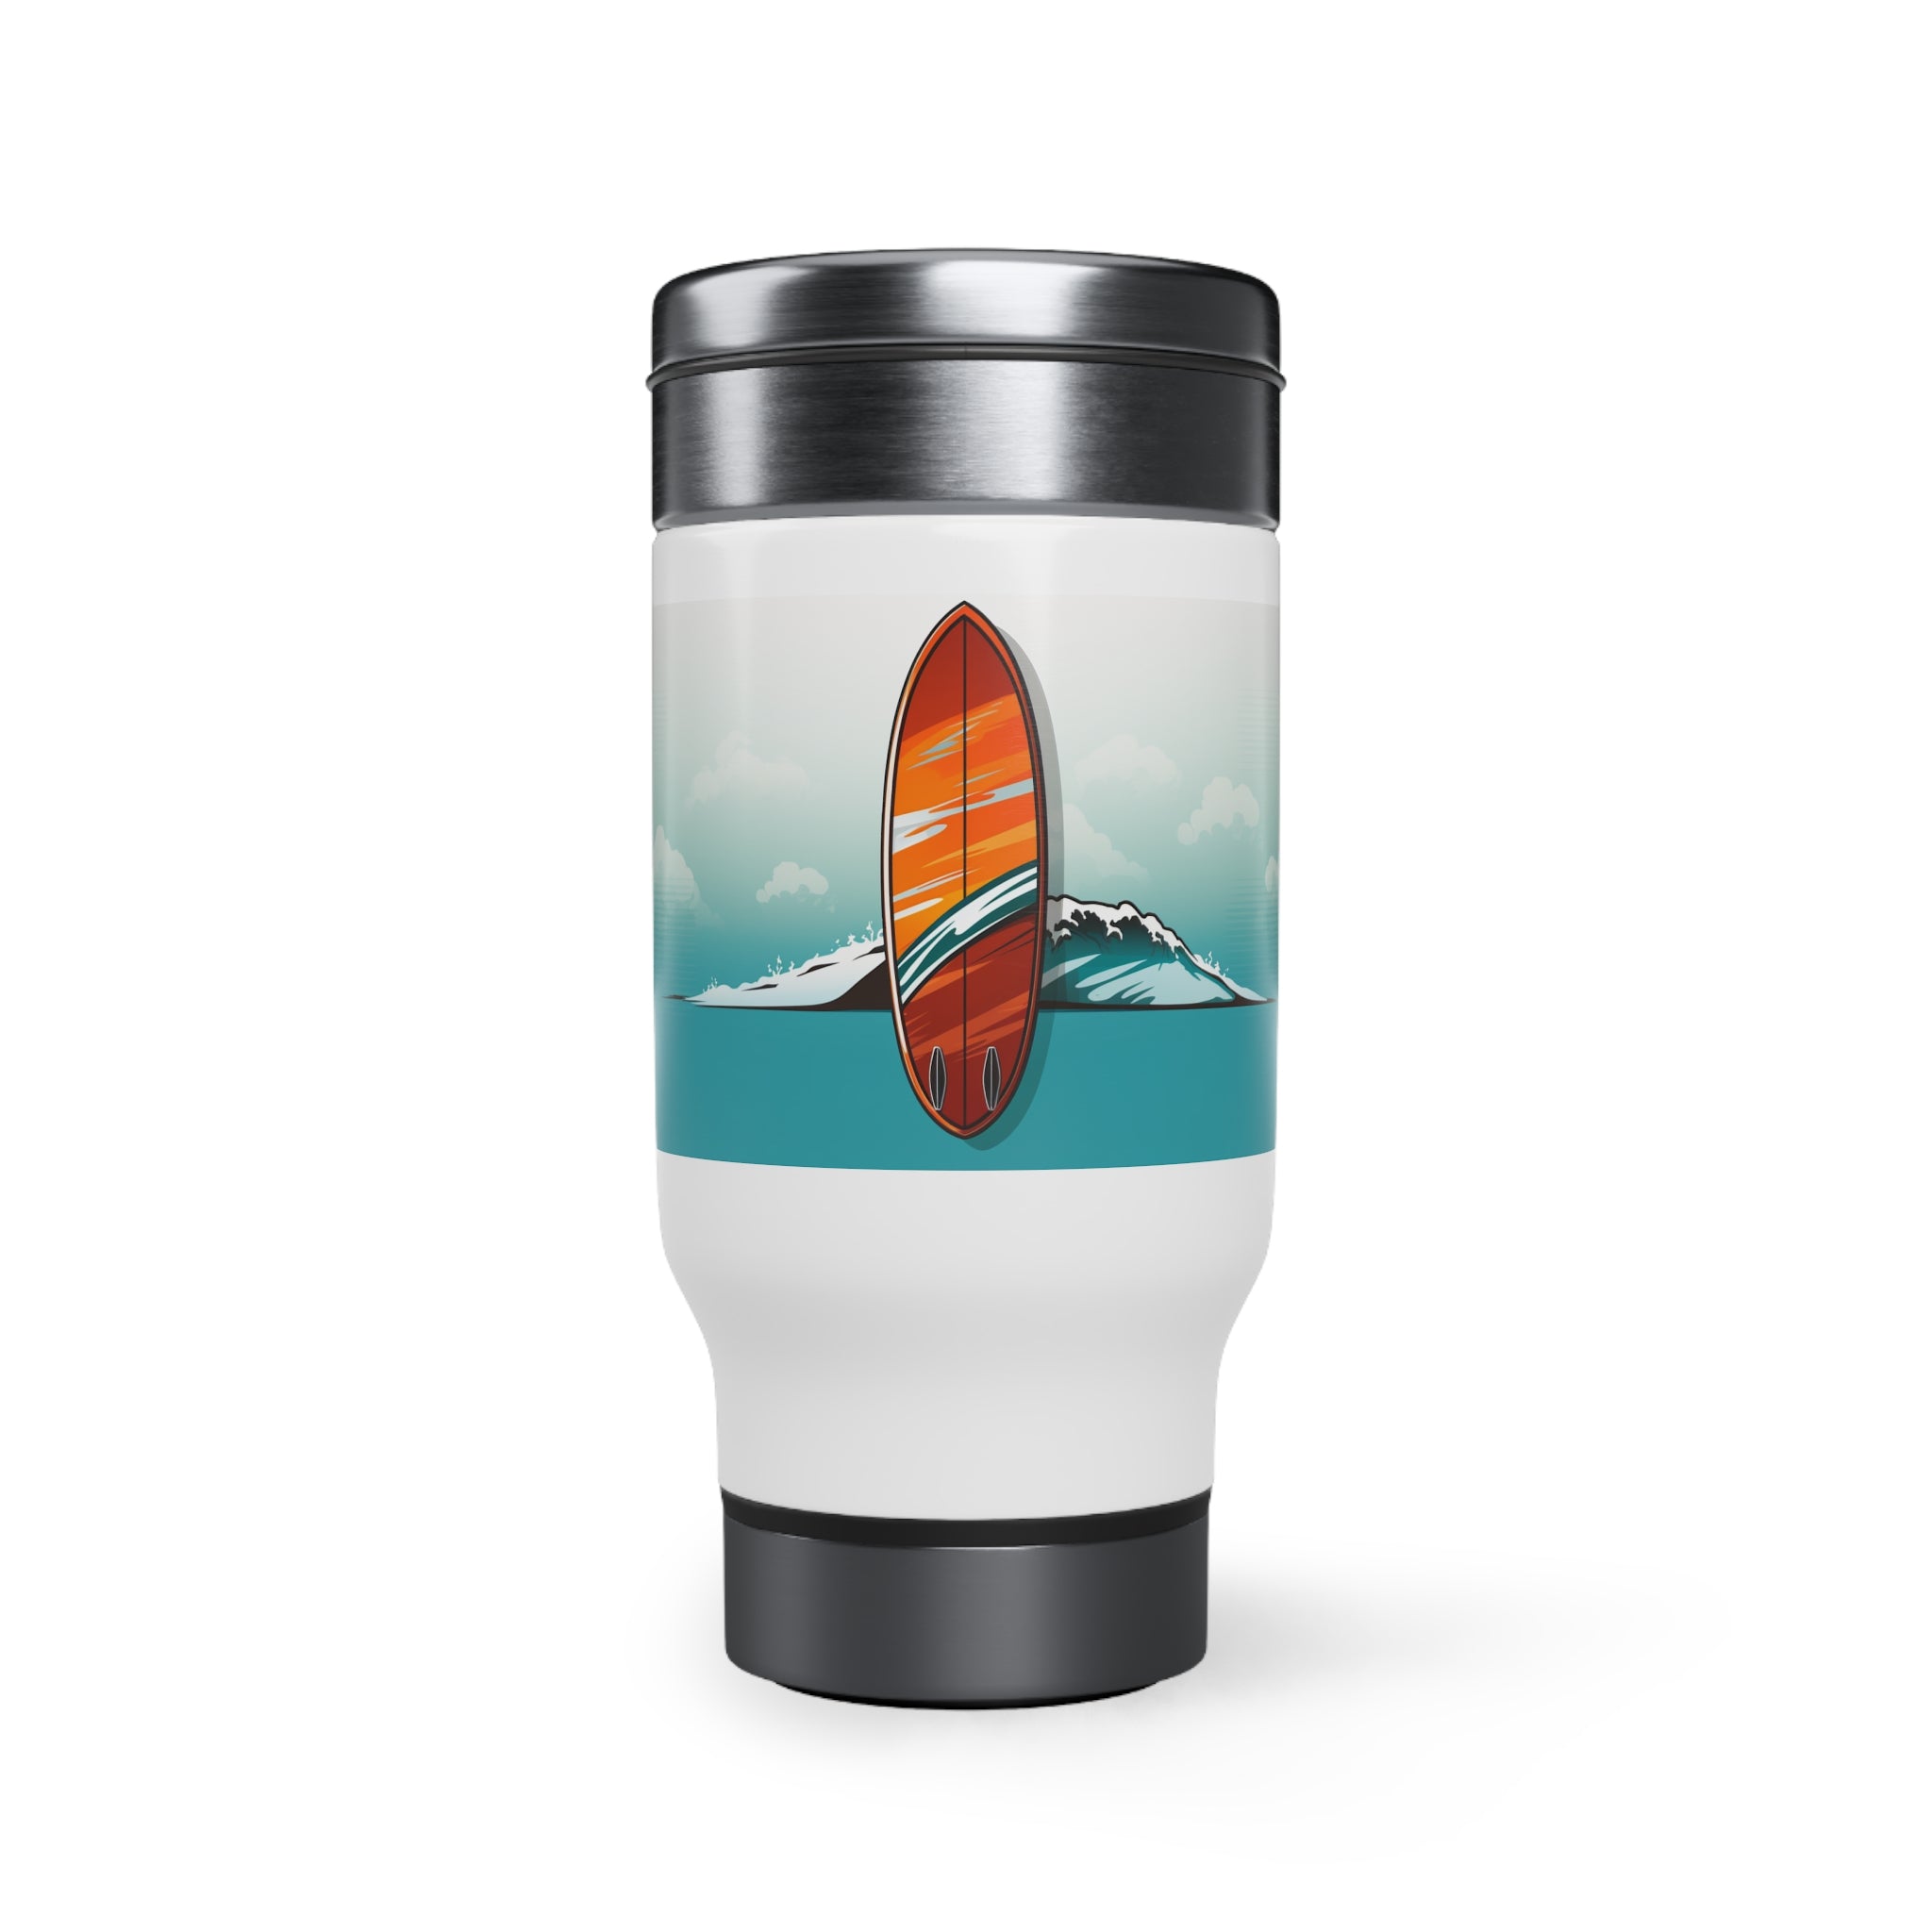 Stainless Steel Travel Mug with Handle, 14oz - Pop Art, Surfboard